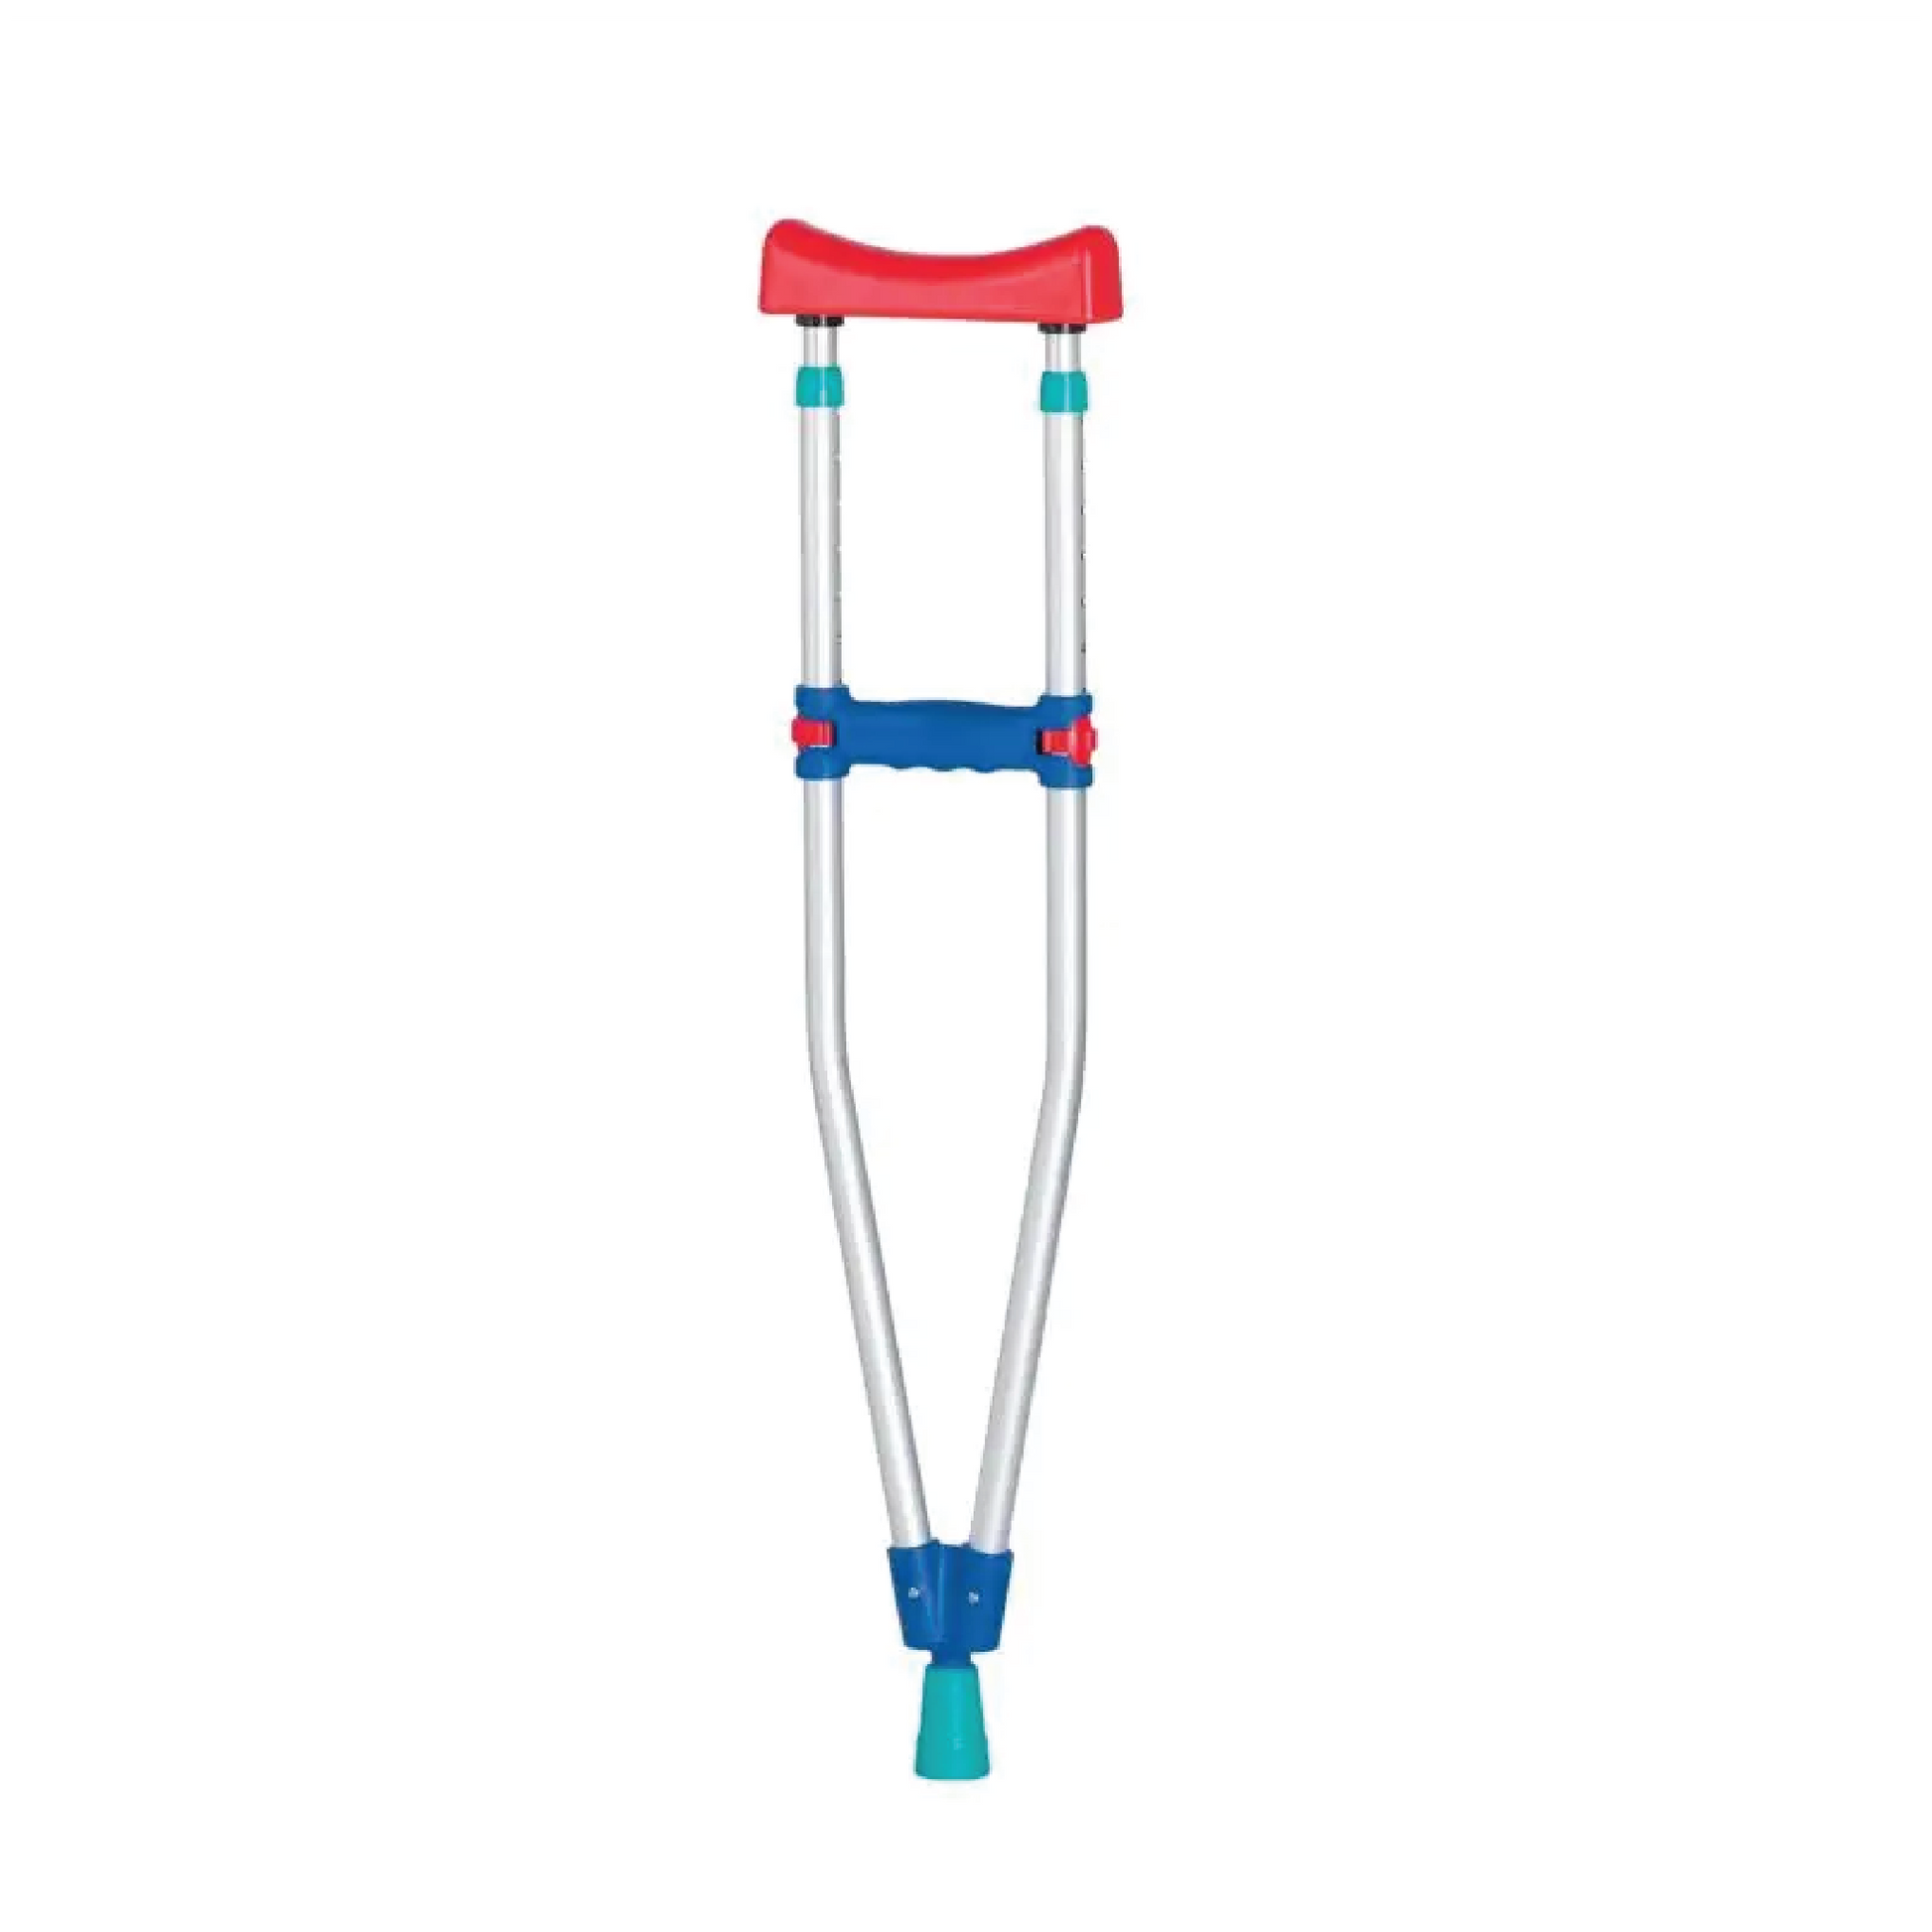 Rebotec Paediatric Axillary Crutches